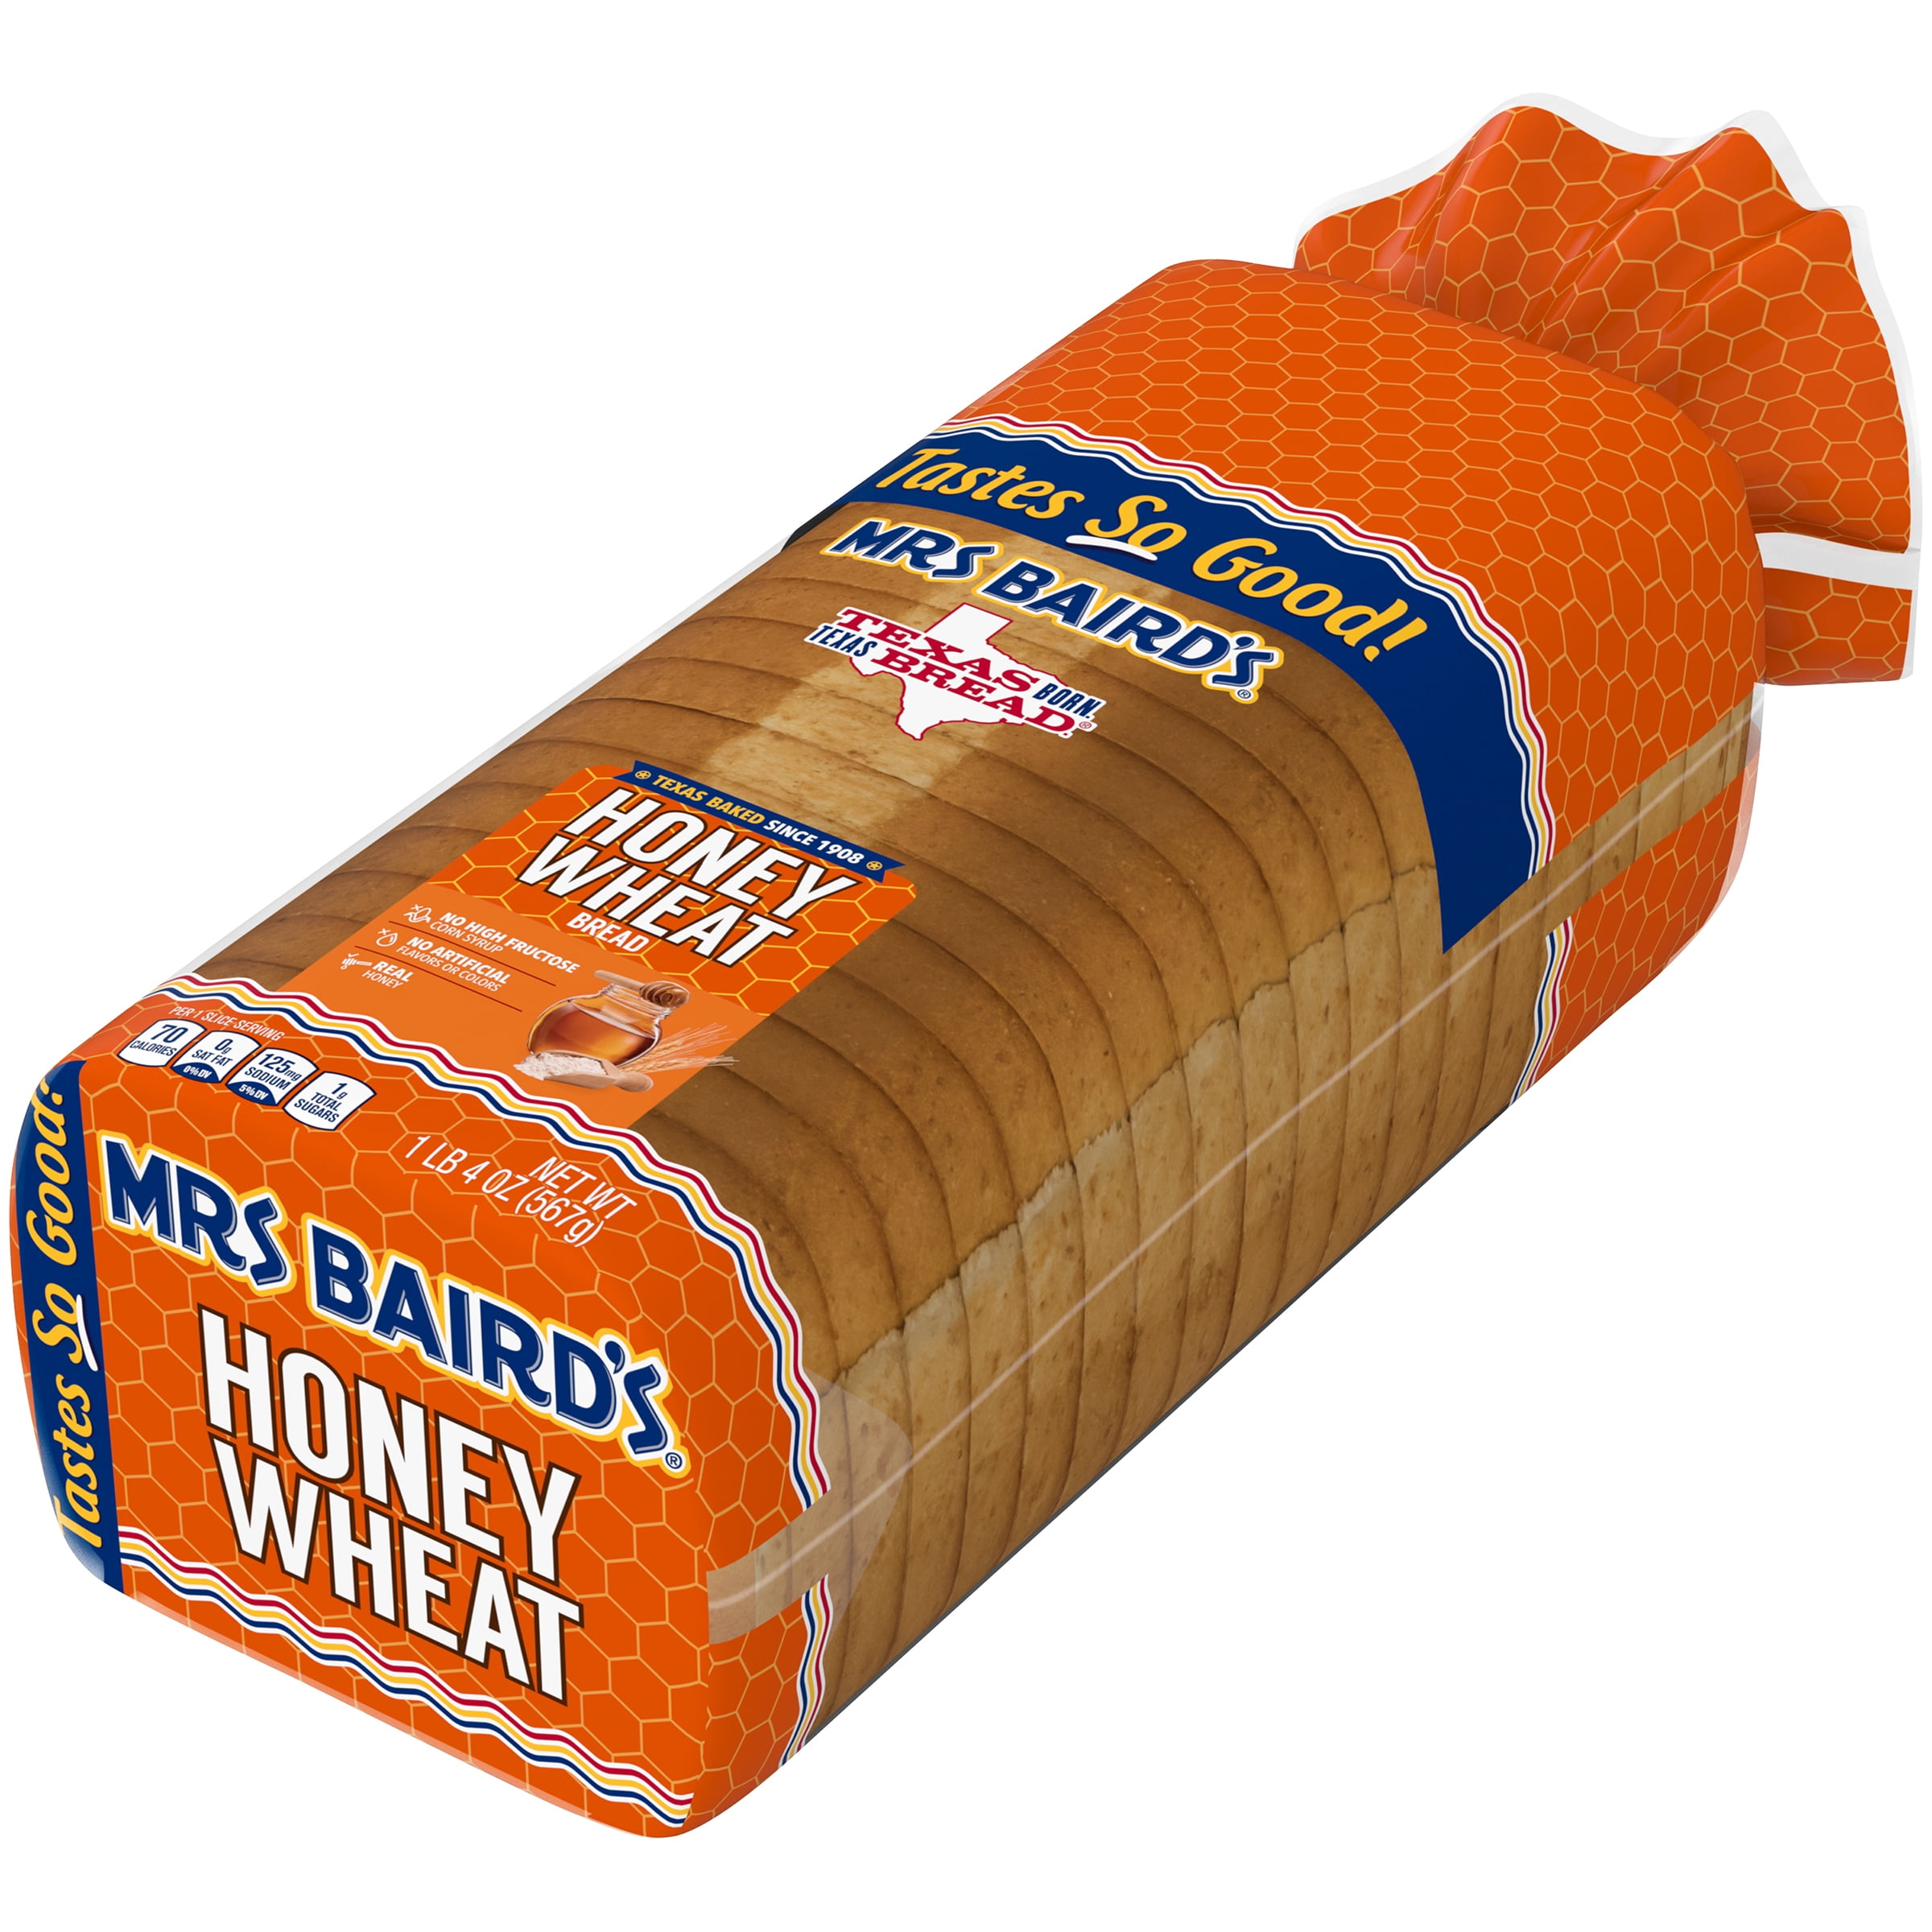 Mrs Baird S Honey Wheat Bread Nutrition Facts | Besto Blog